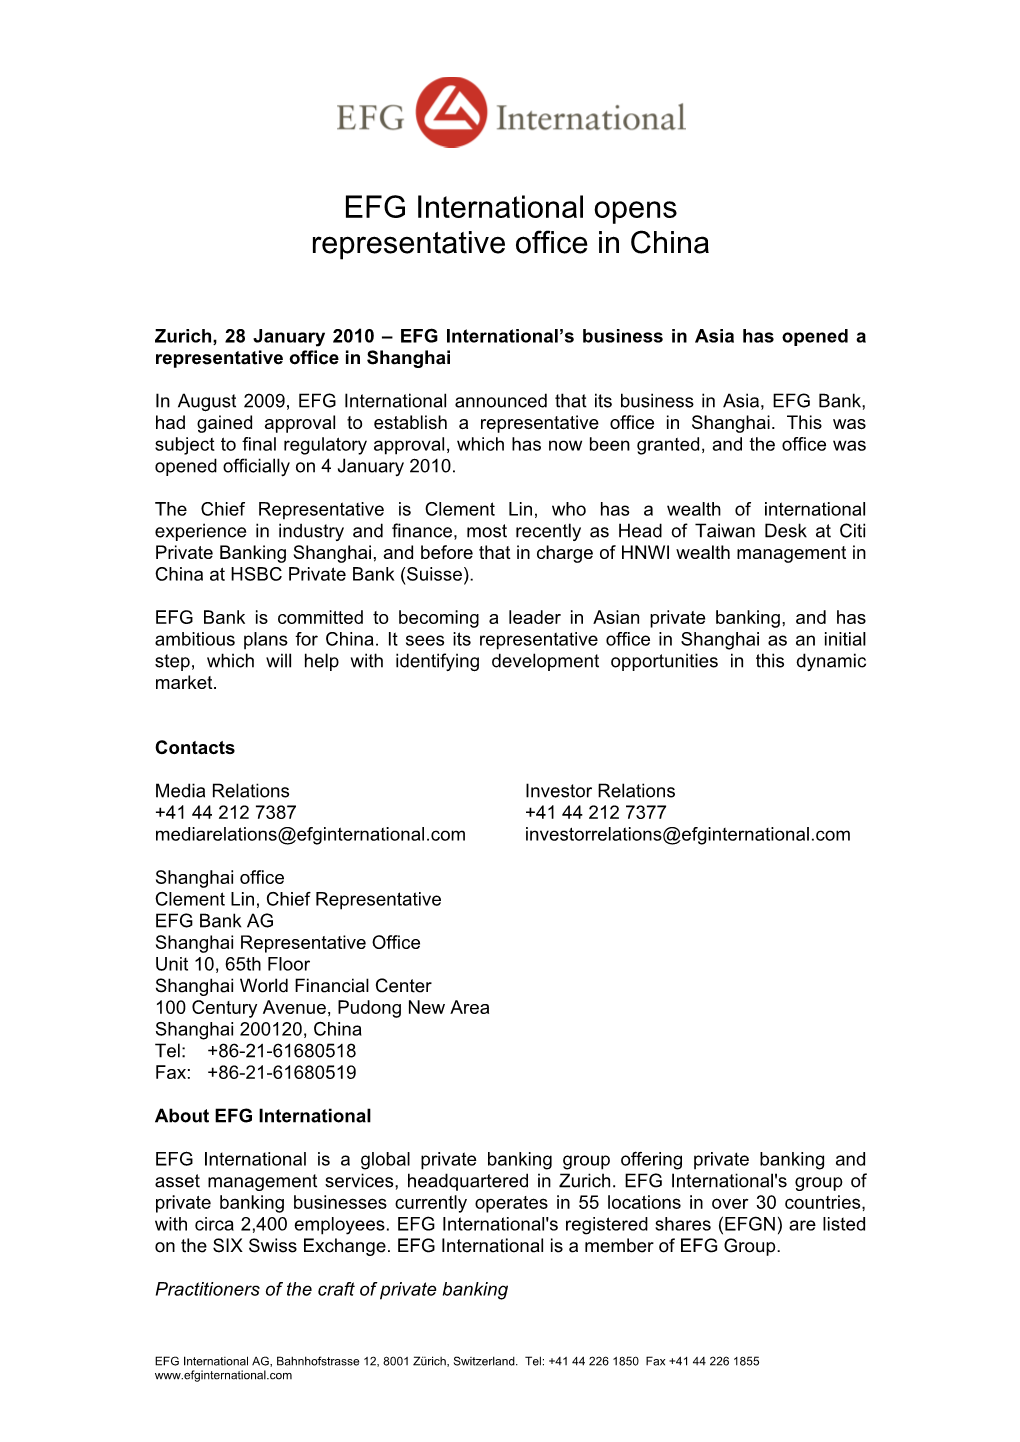 EFG International Opens Representative Office in China